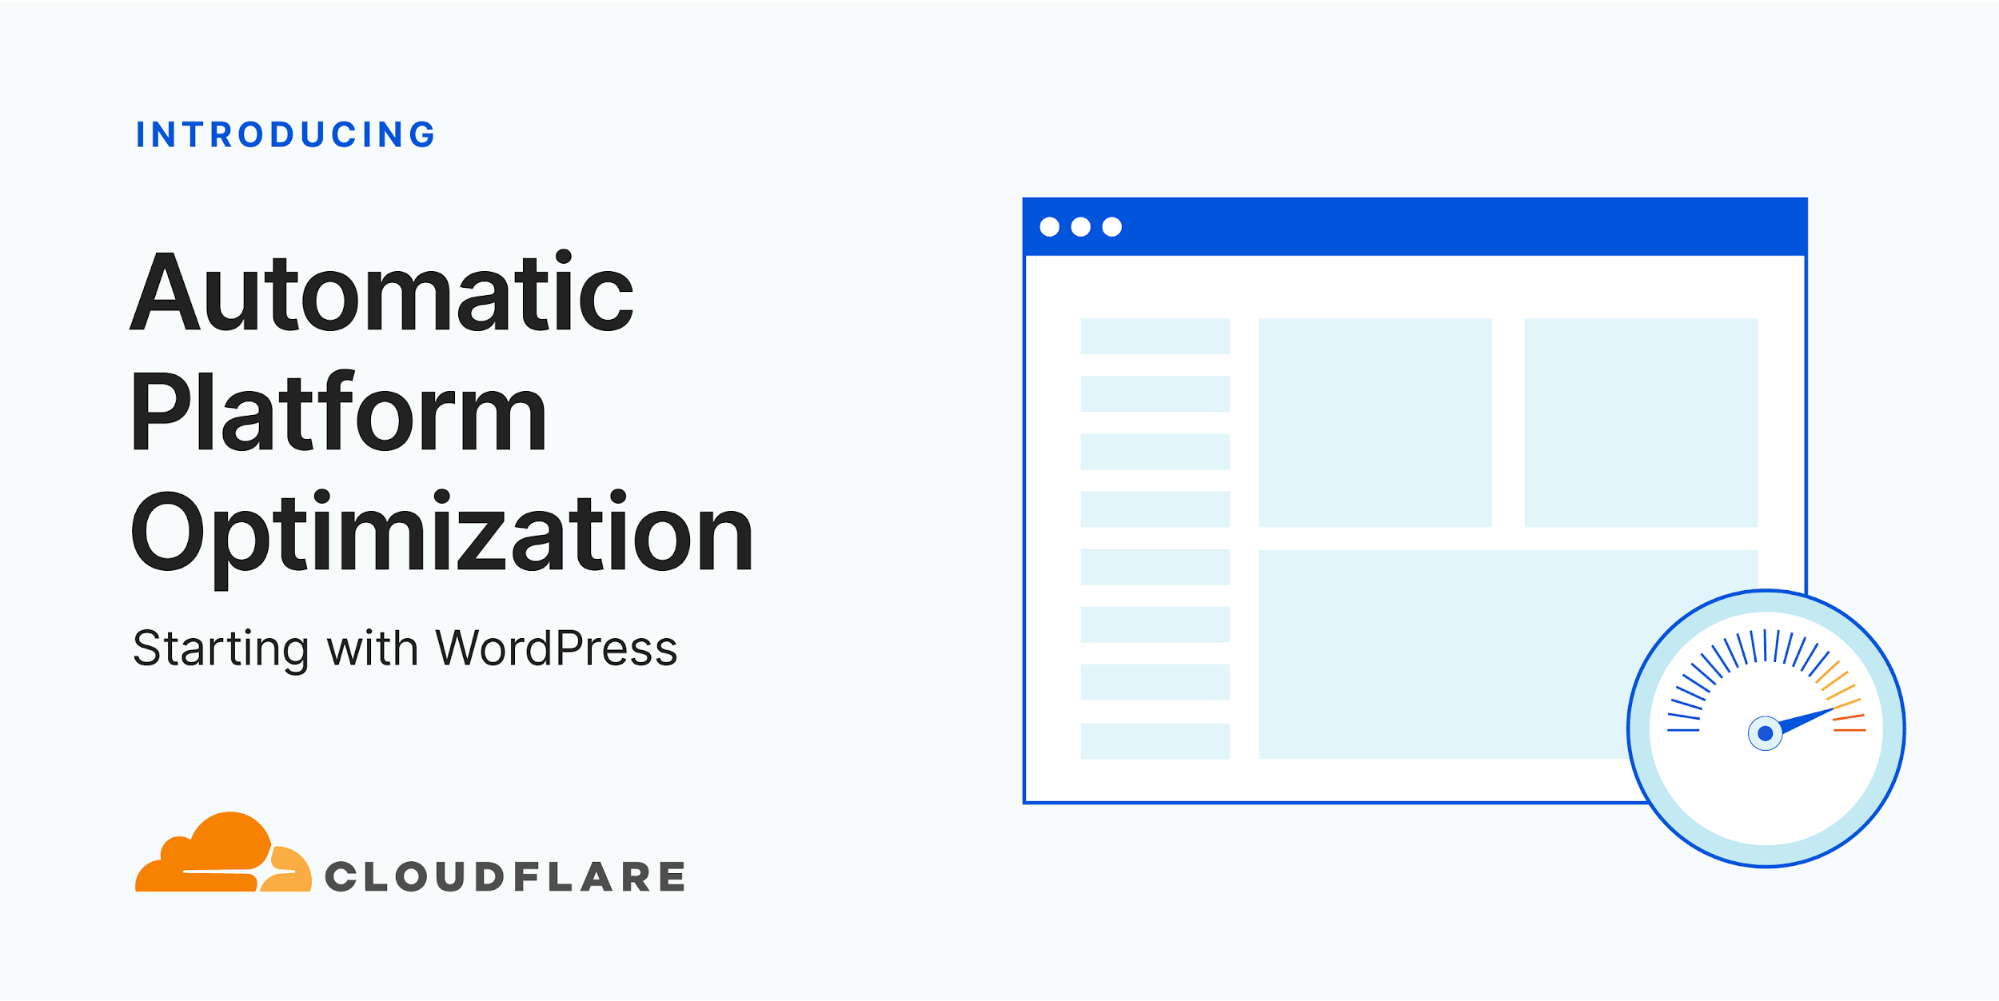 Introducing Automatic Platform Optimization, starting with WordPress